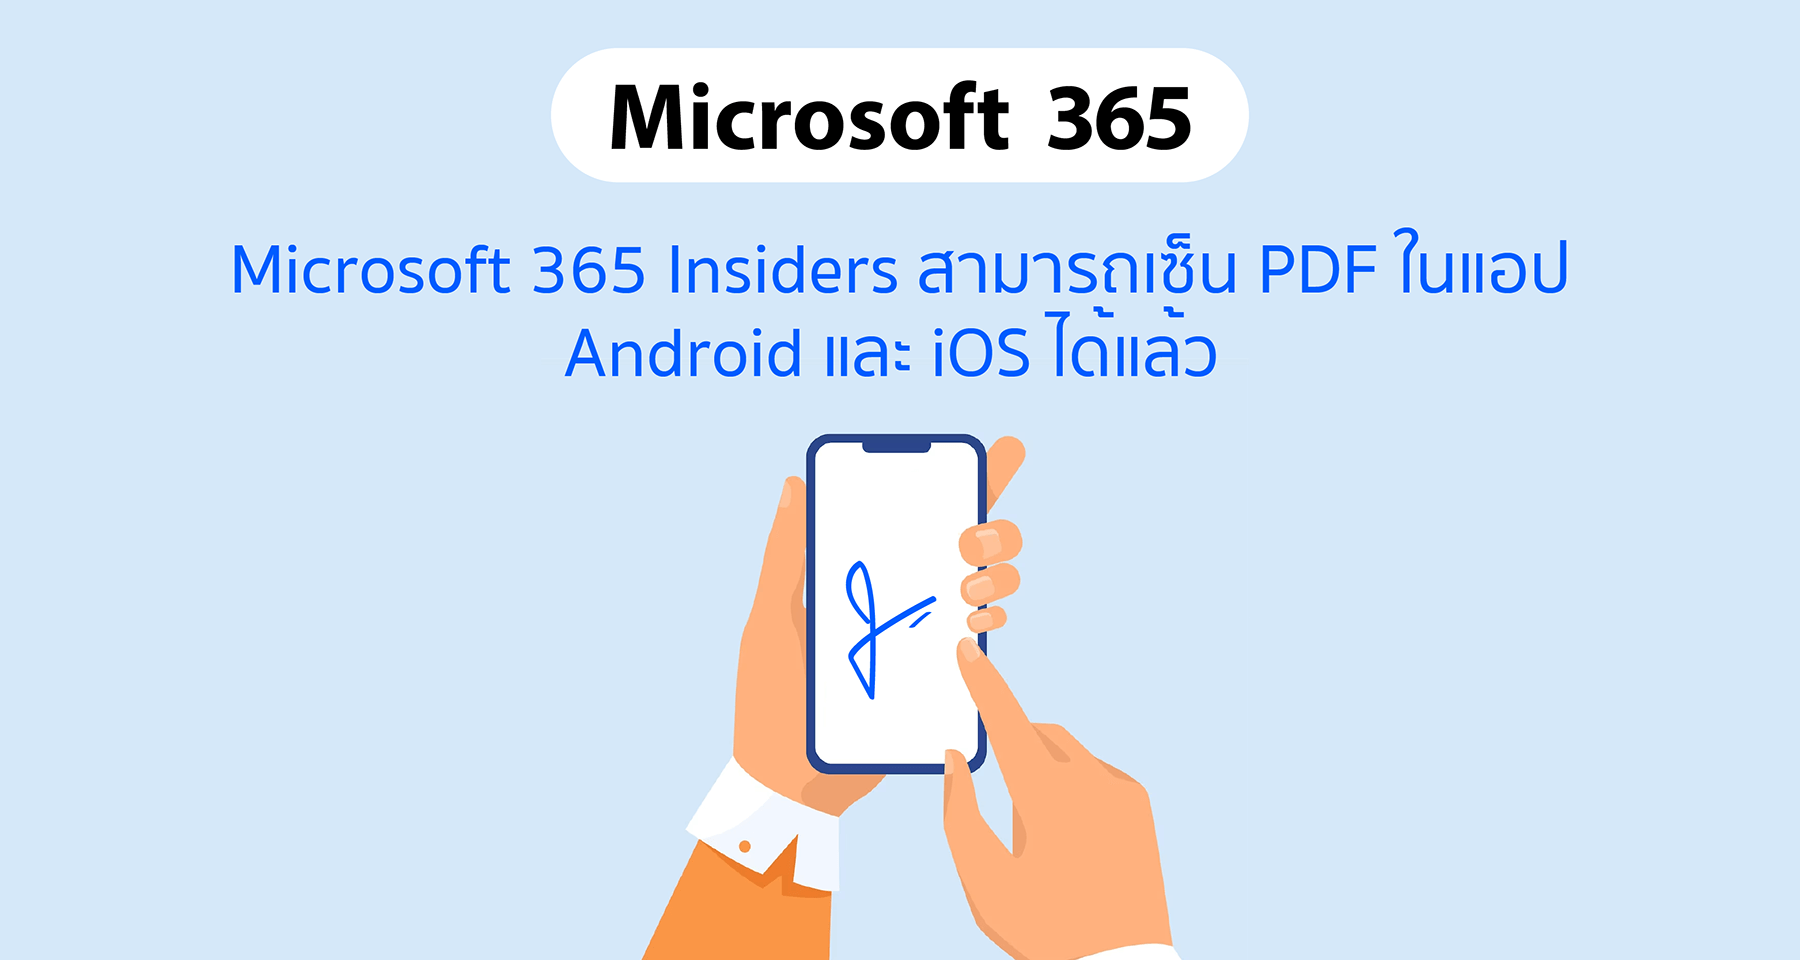 Microsoft 365 Insiders สามารถเซ็น PDF ในแอป Android และ iOS ได้แล้ว